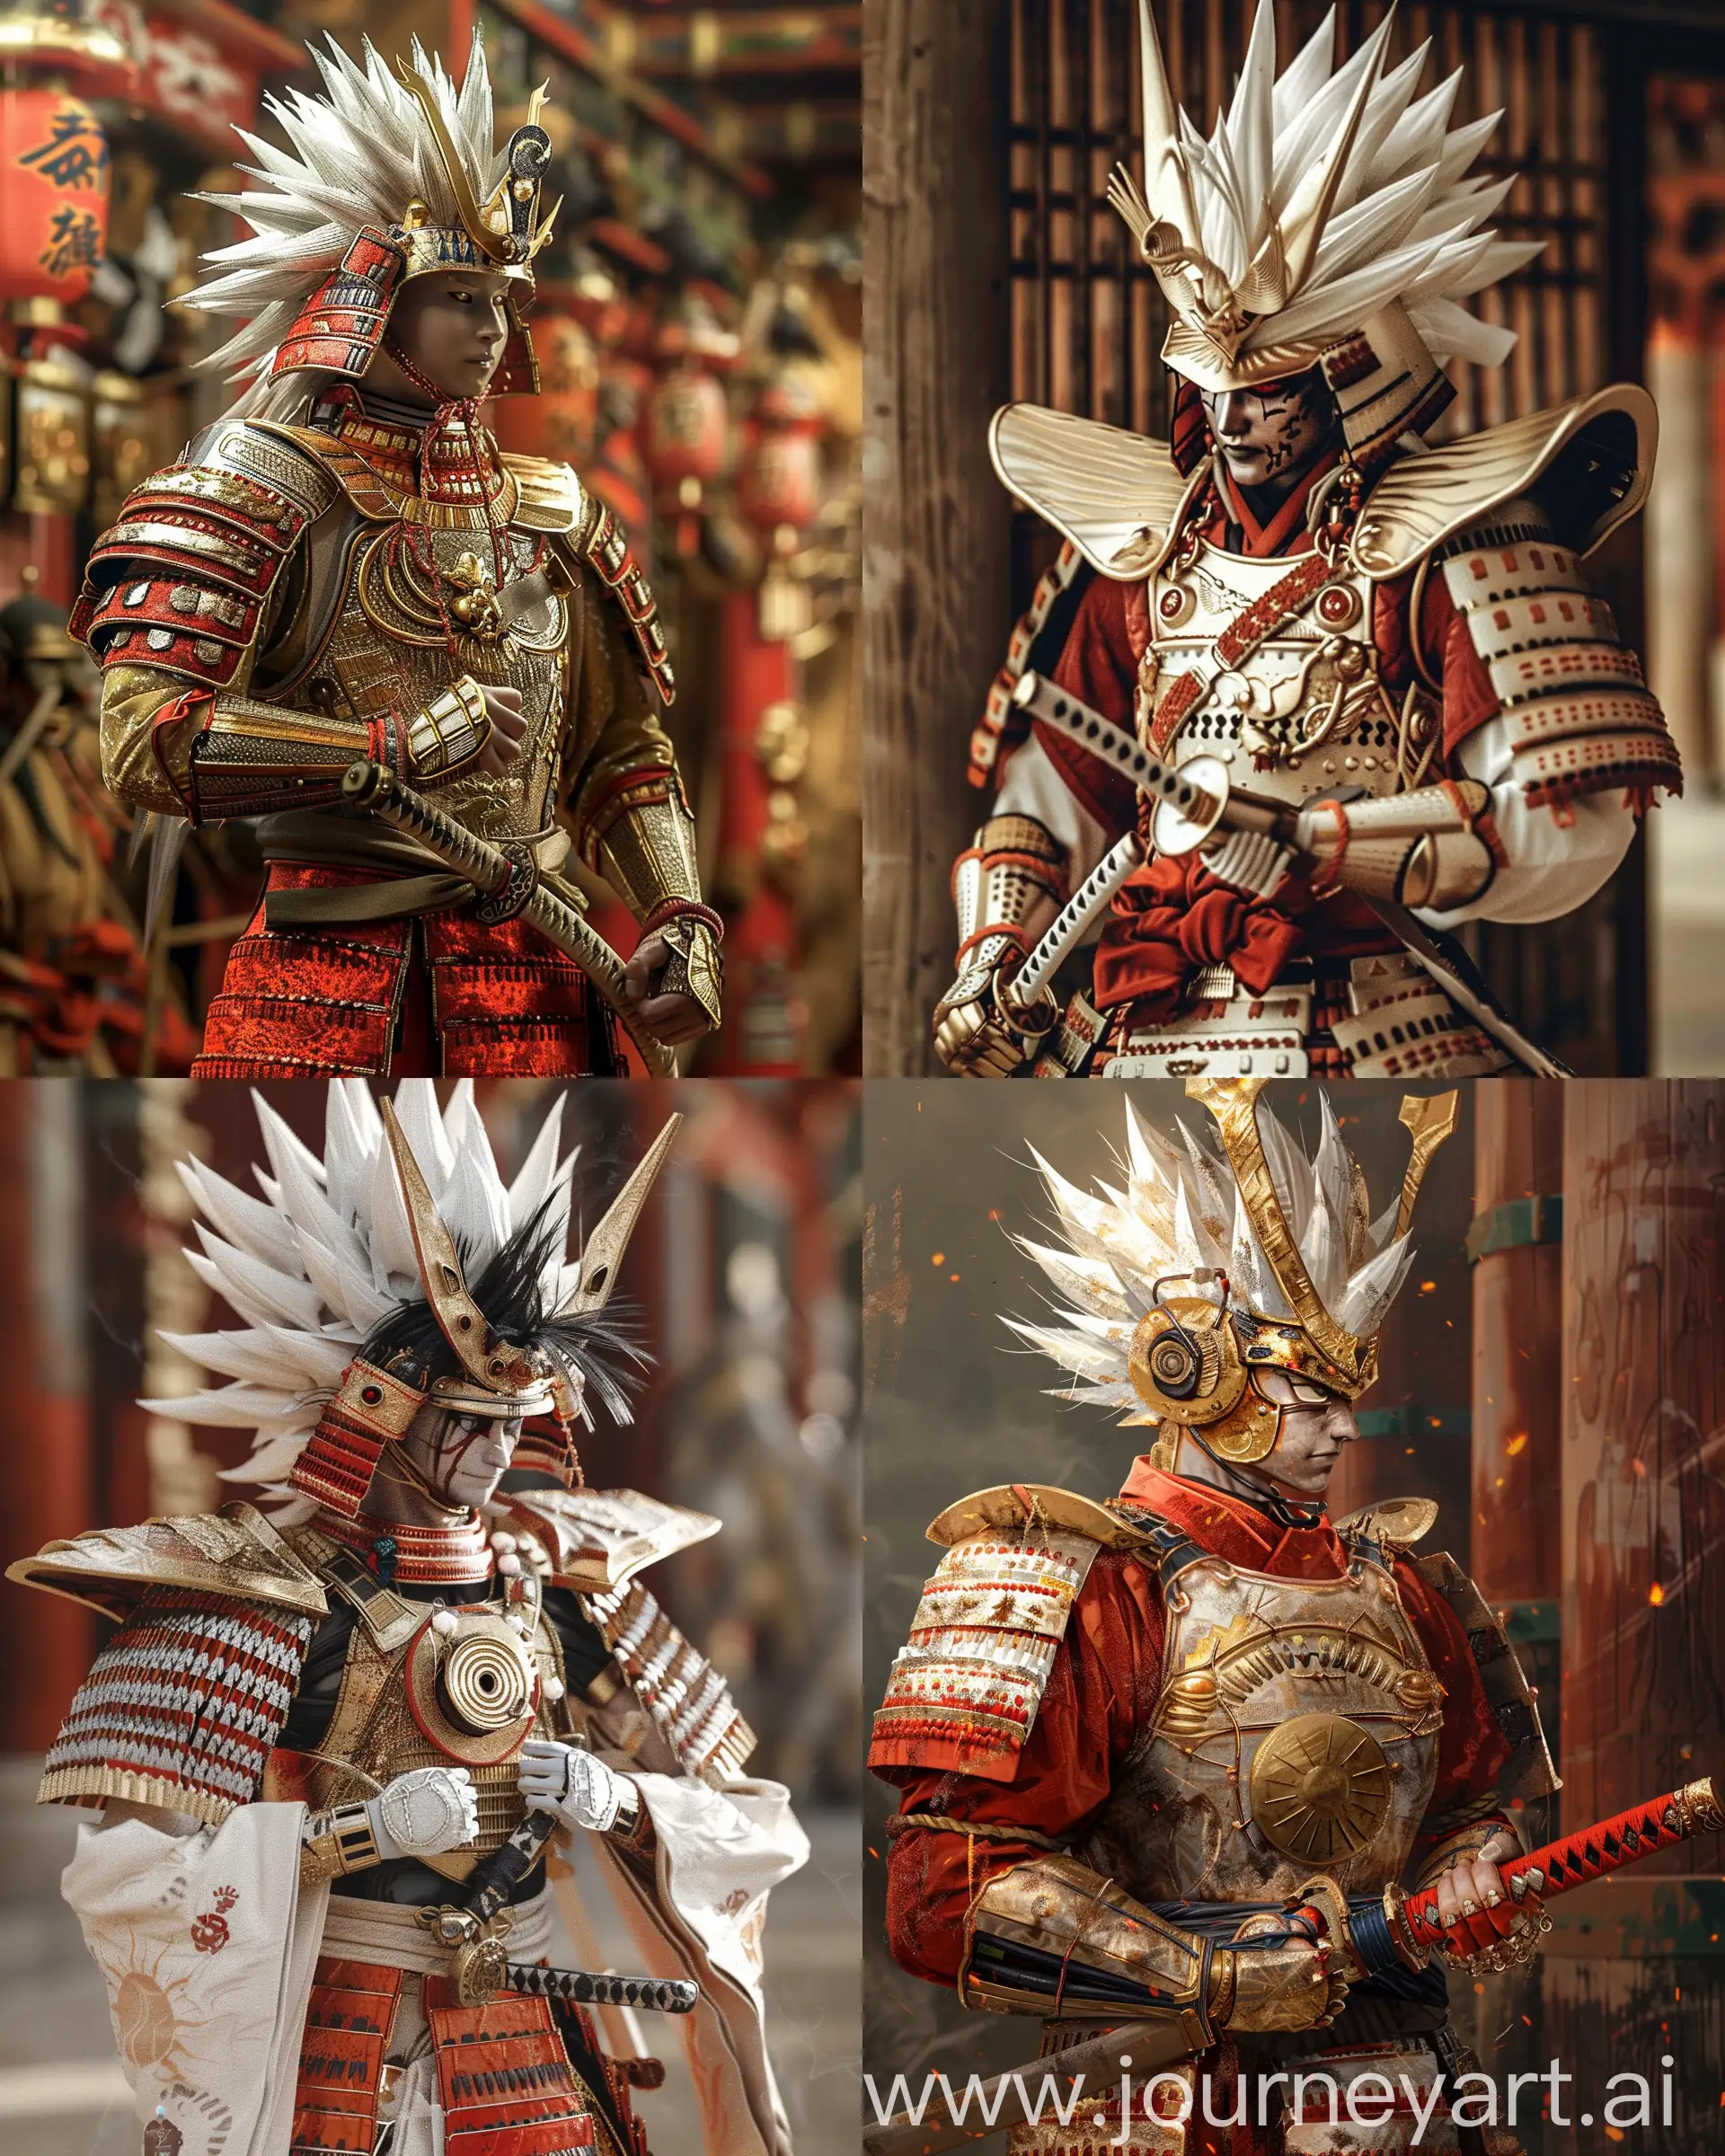 Cyberpunk-Samurai-Warrior-in-Red-Armor-with-Samurai-Sword